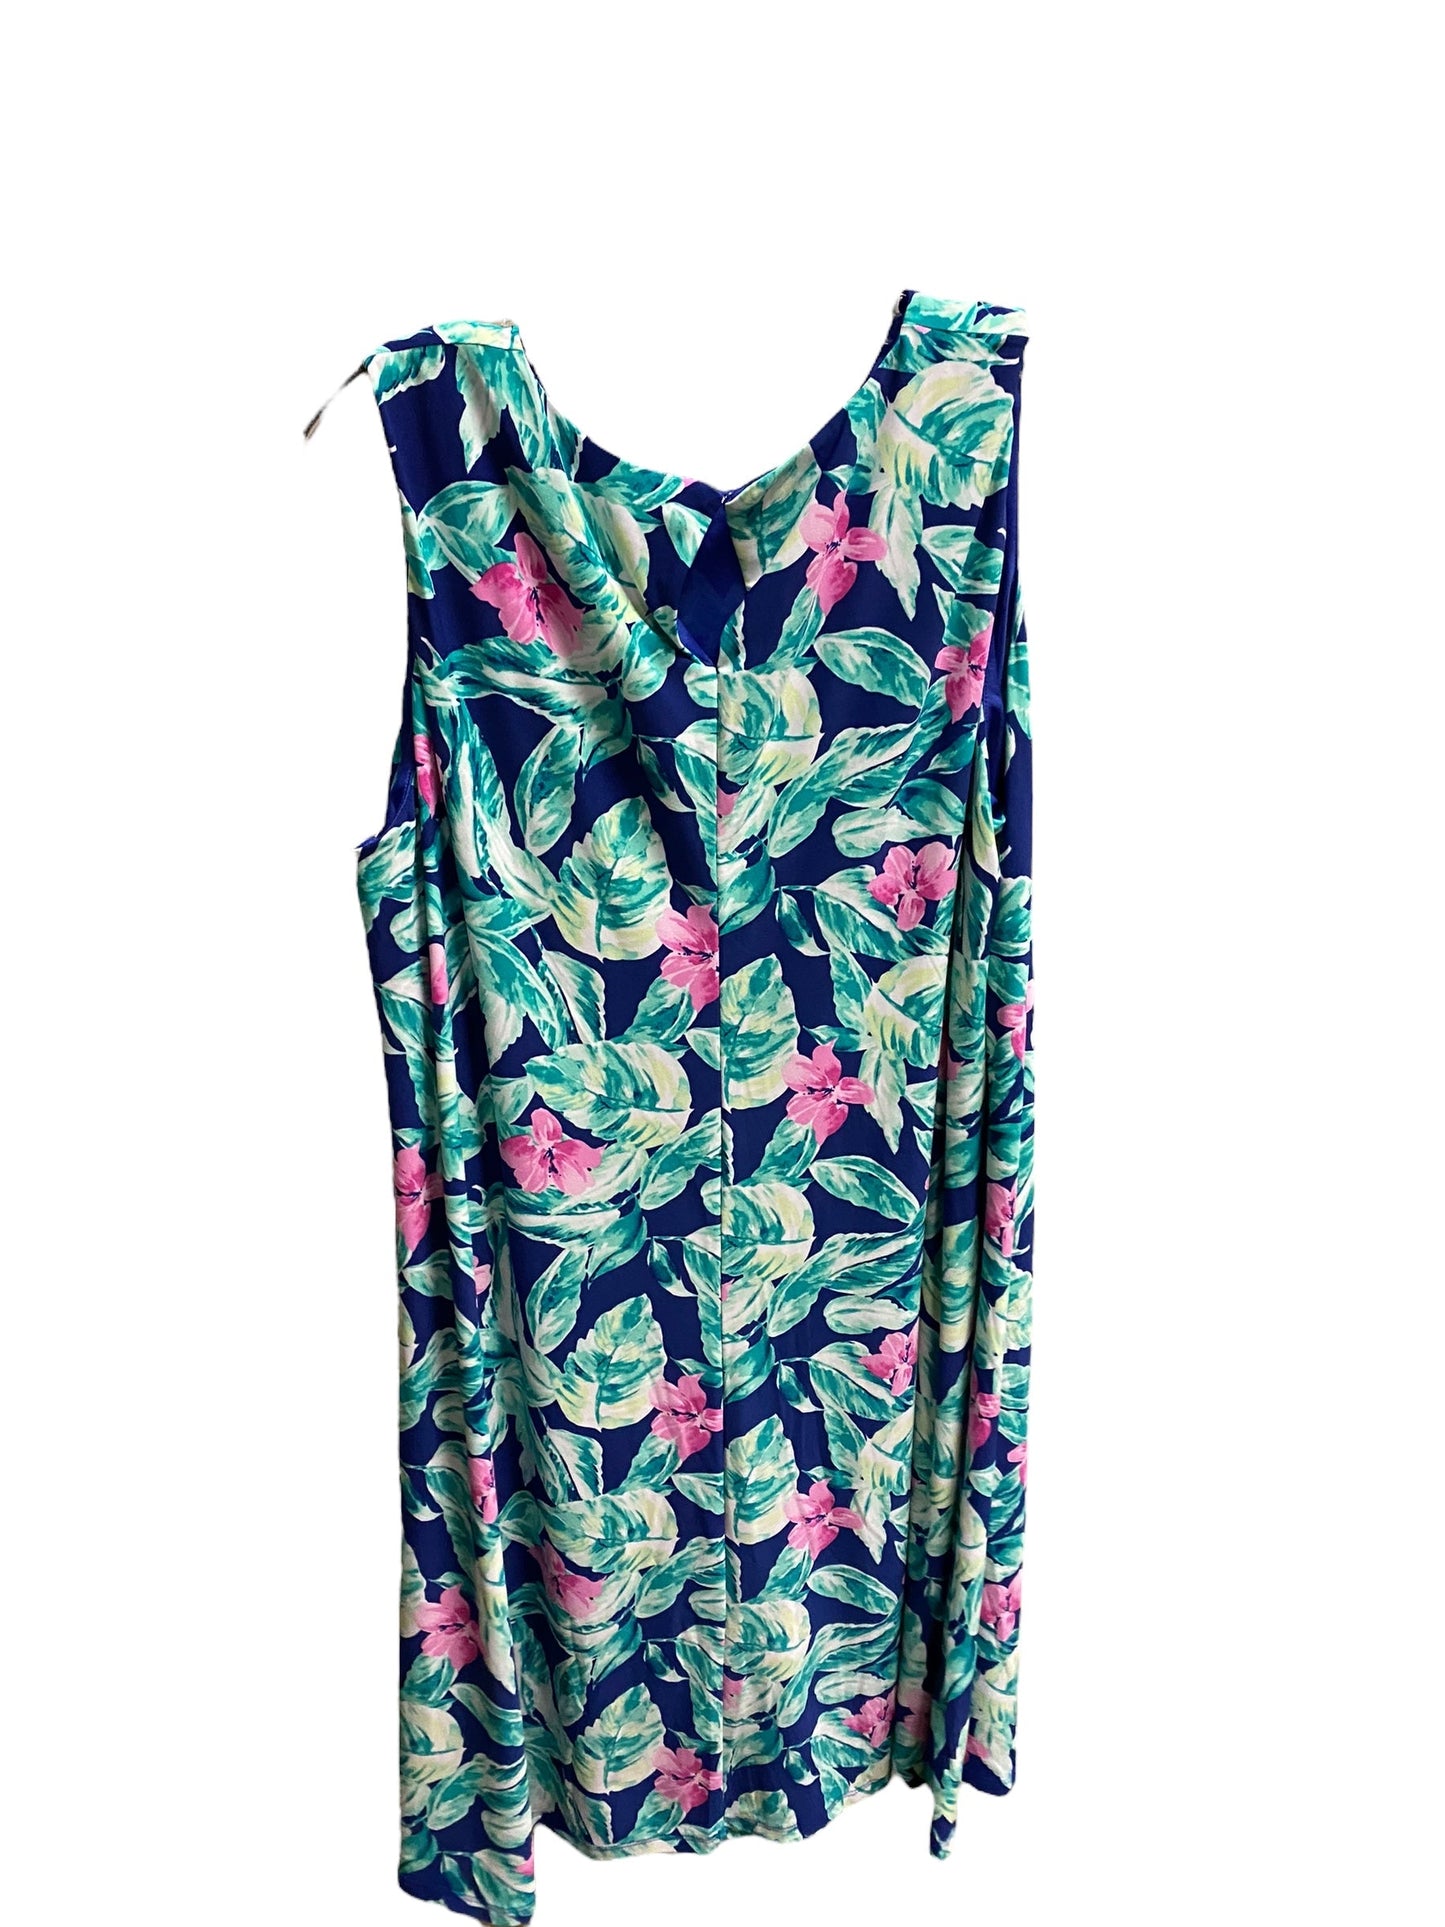 Tropical Print Dress Casual Short Pappagallo, Size 2x